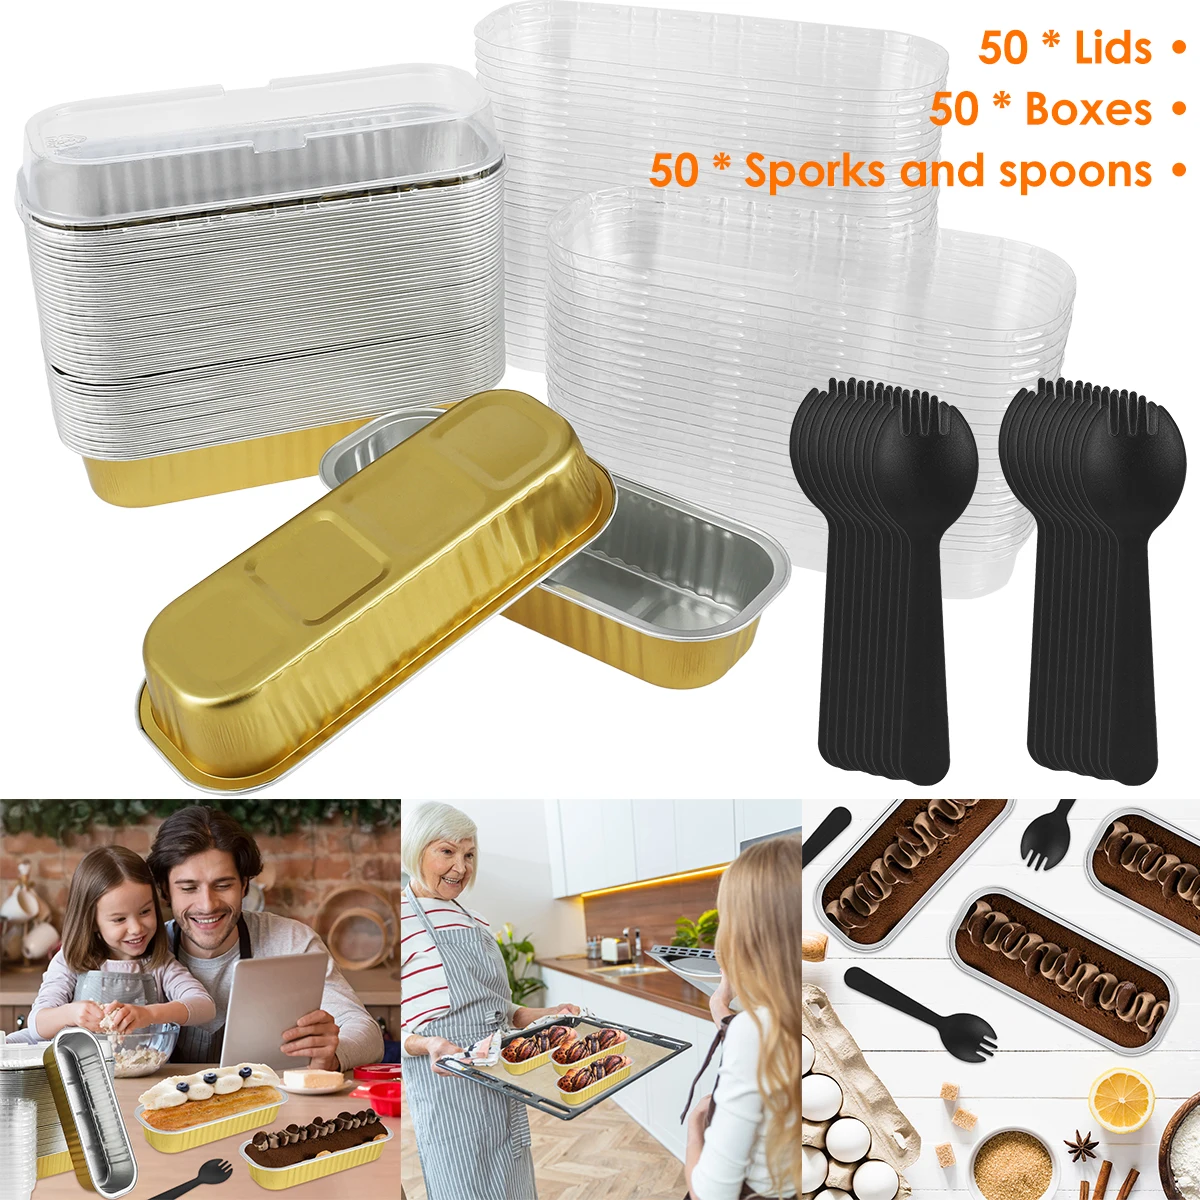 

150Pcs Mini Loaf Pans with Lids and Spoons 200ml Non-Stick Aluminum Foil Loaf Pans Reusable Square Foil Bread Container